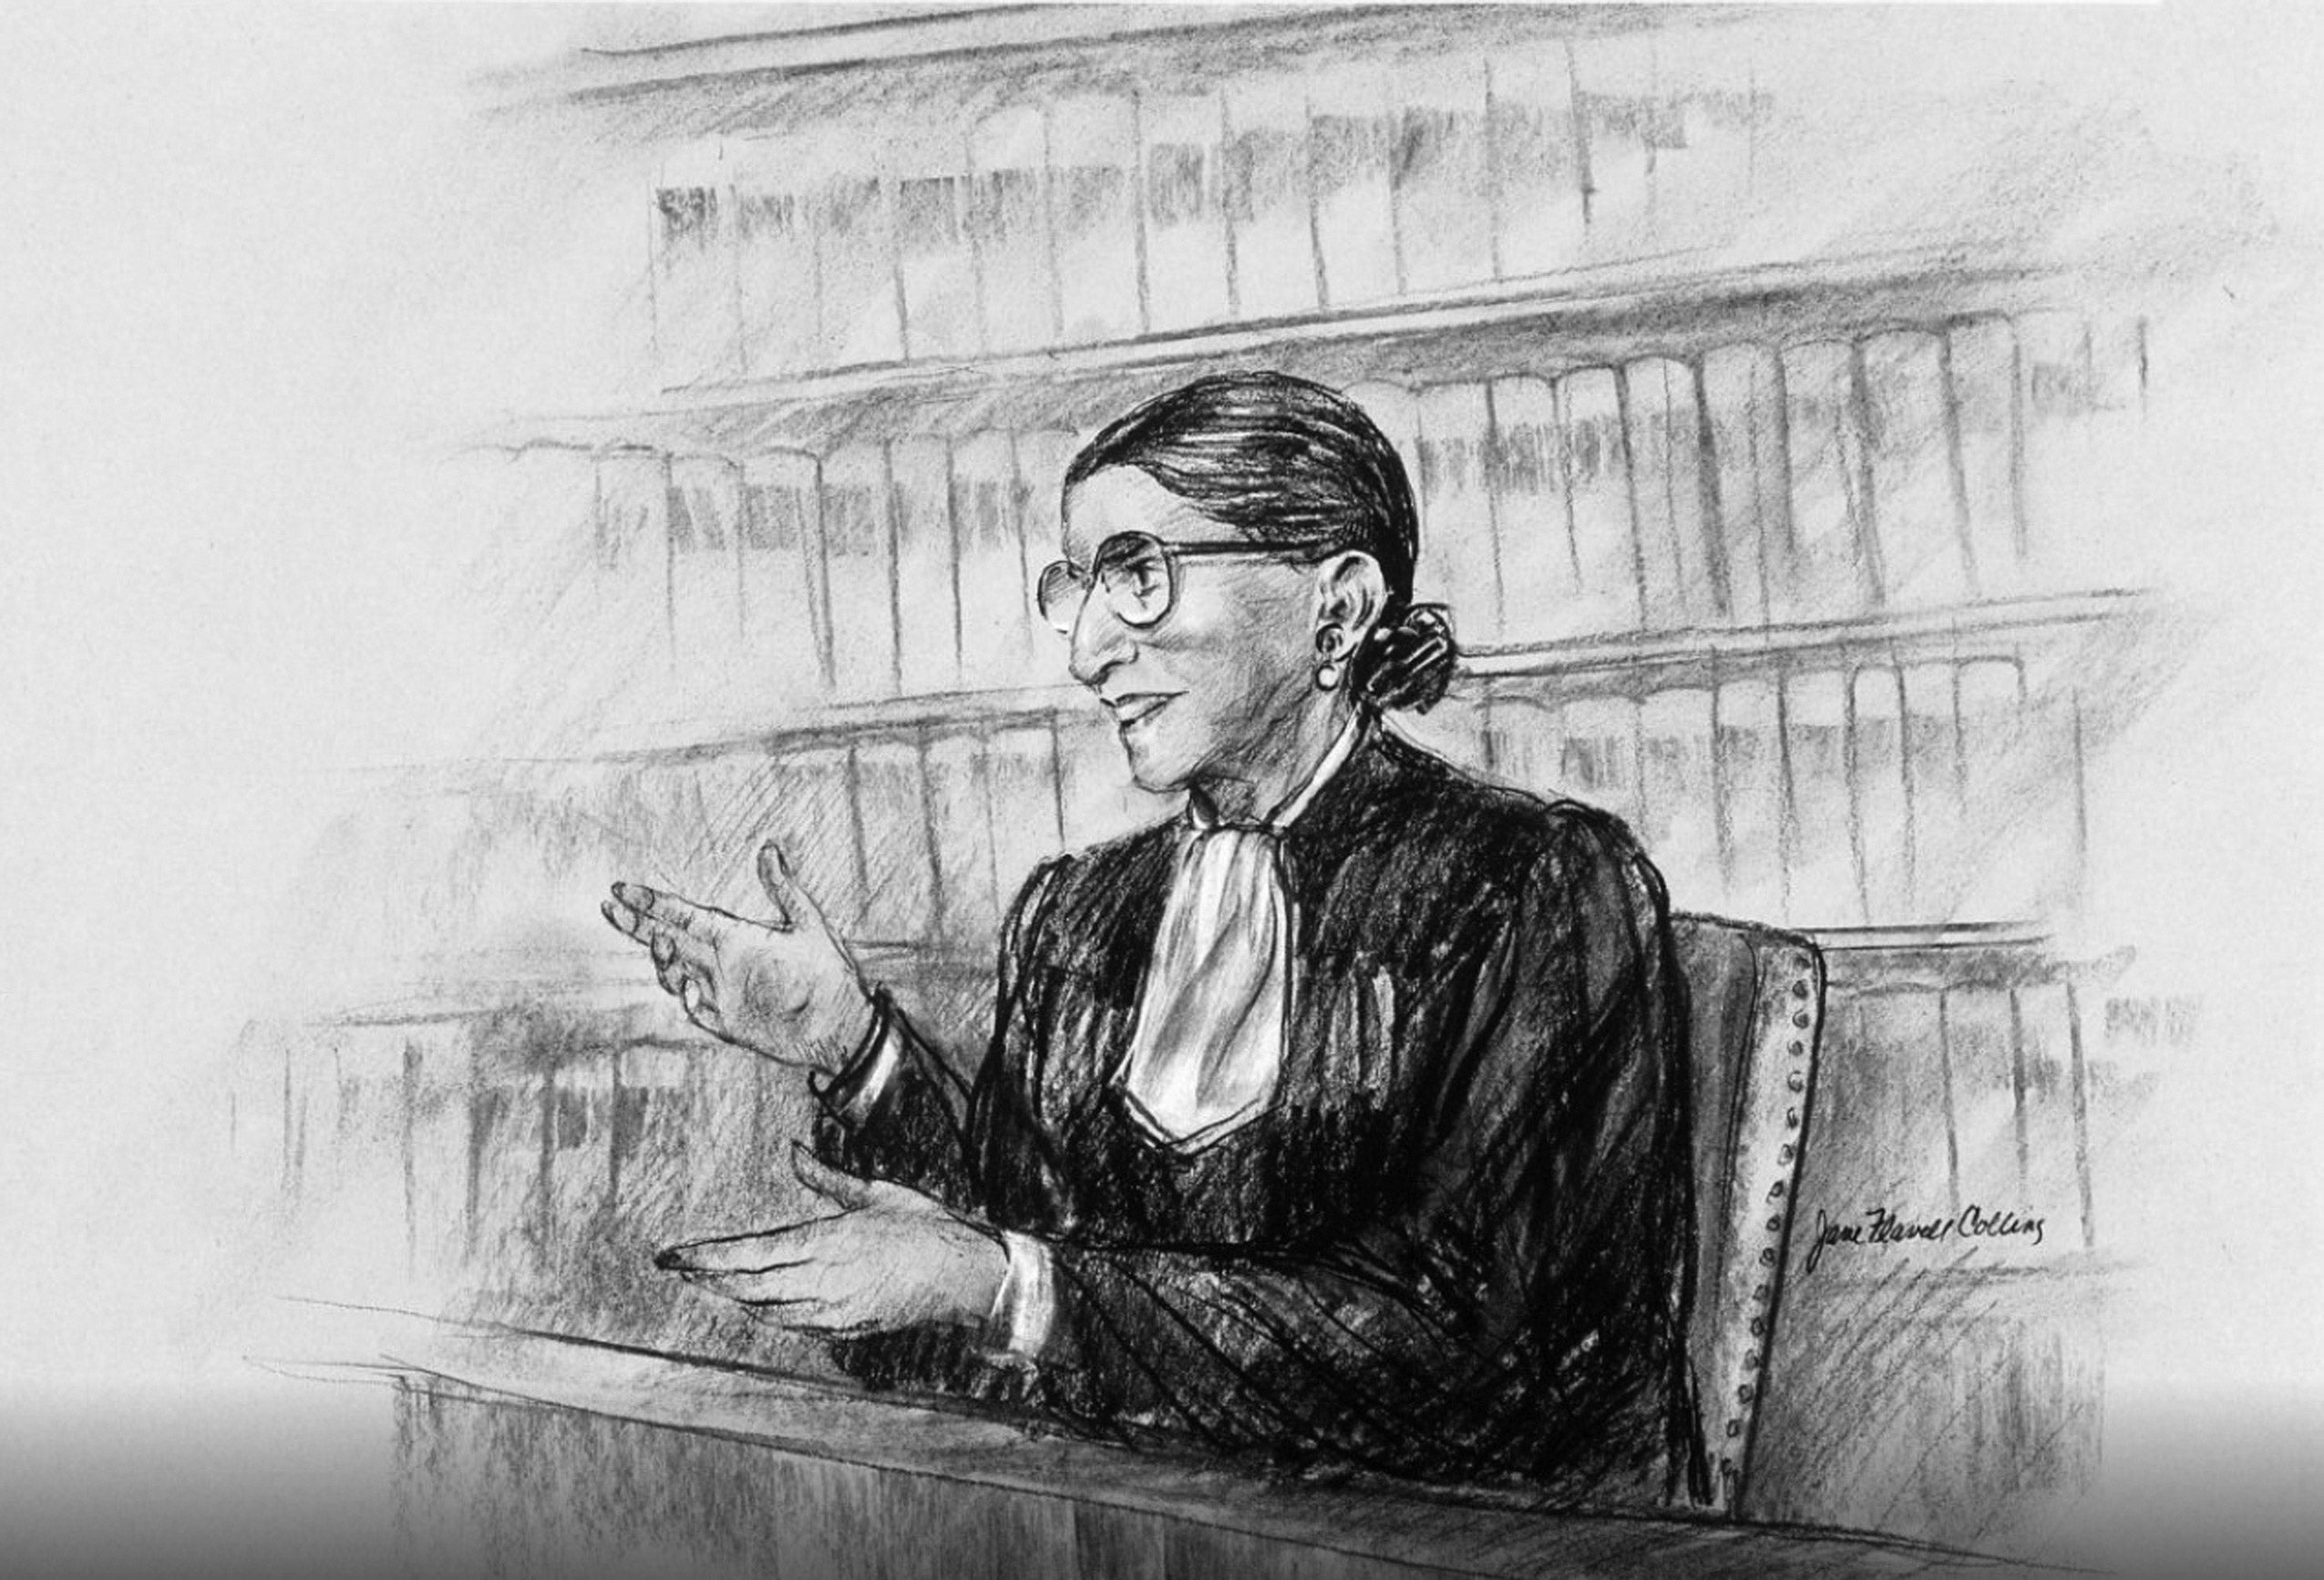 Black and white illustration of Ruth Bader Ginsburg.